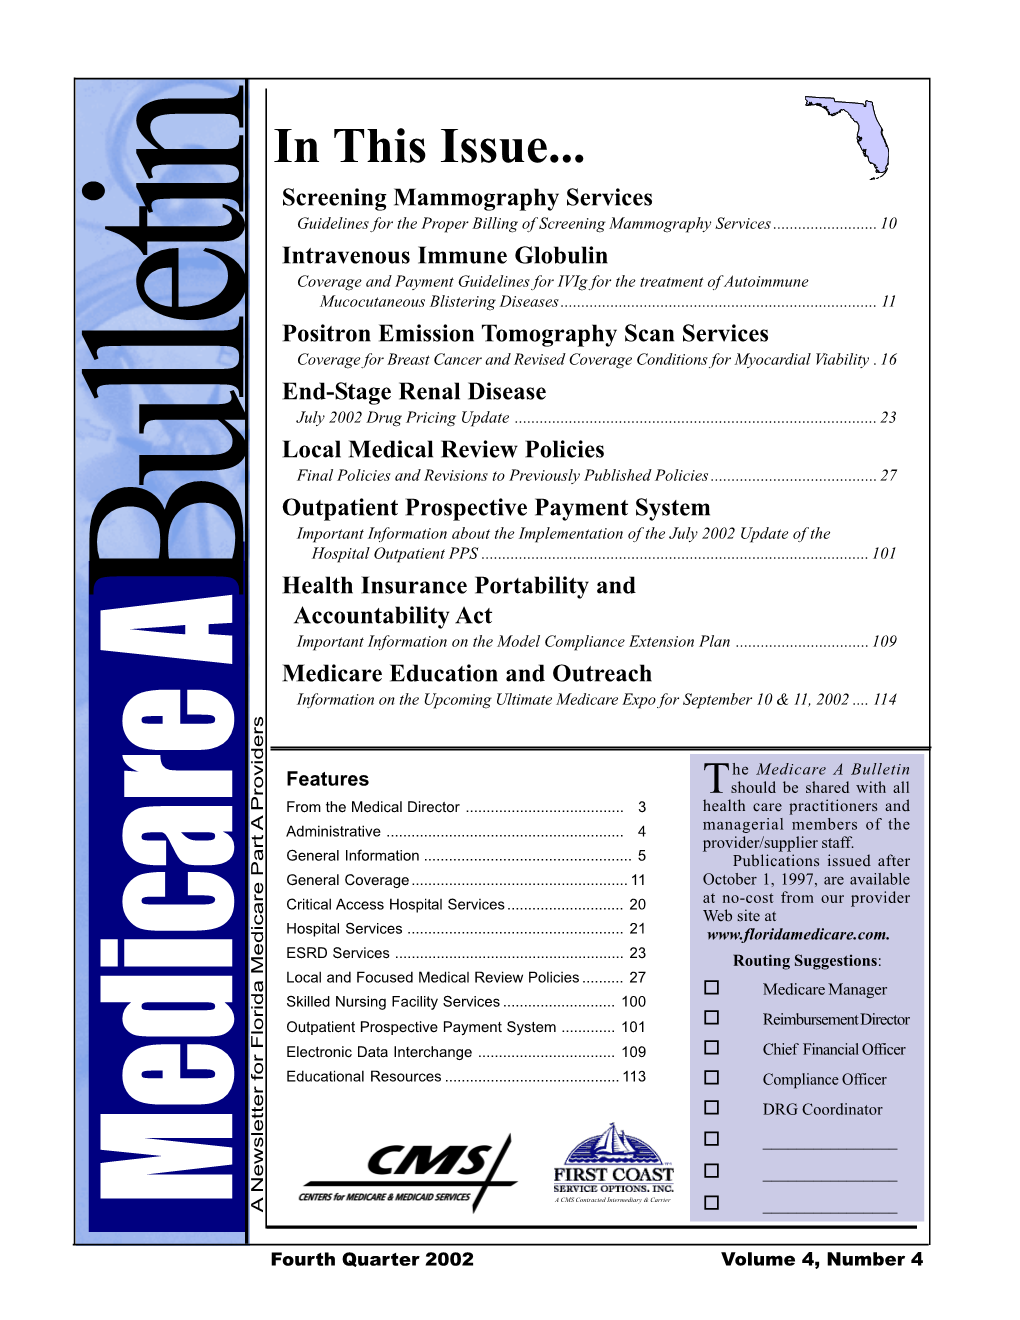 Fourth Quarter 2002 Medicare a Bulletin Is Publication Schedule